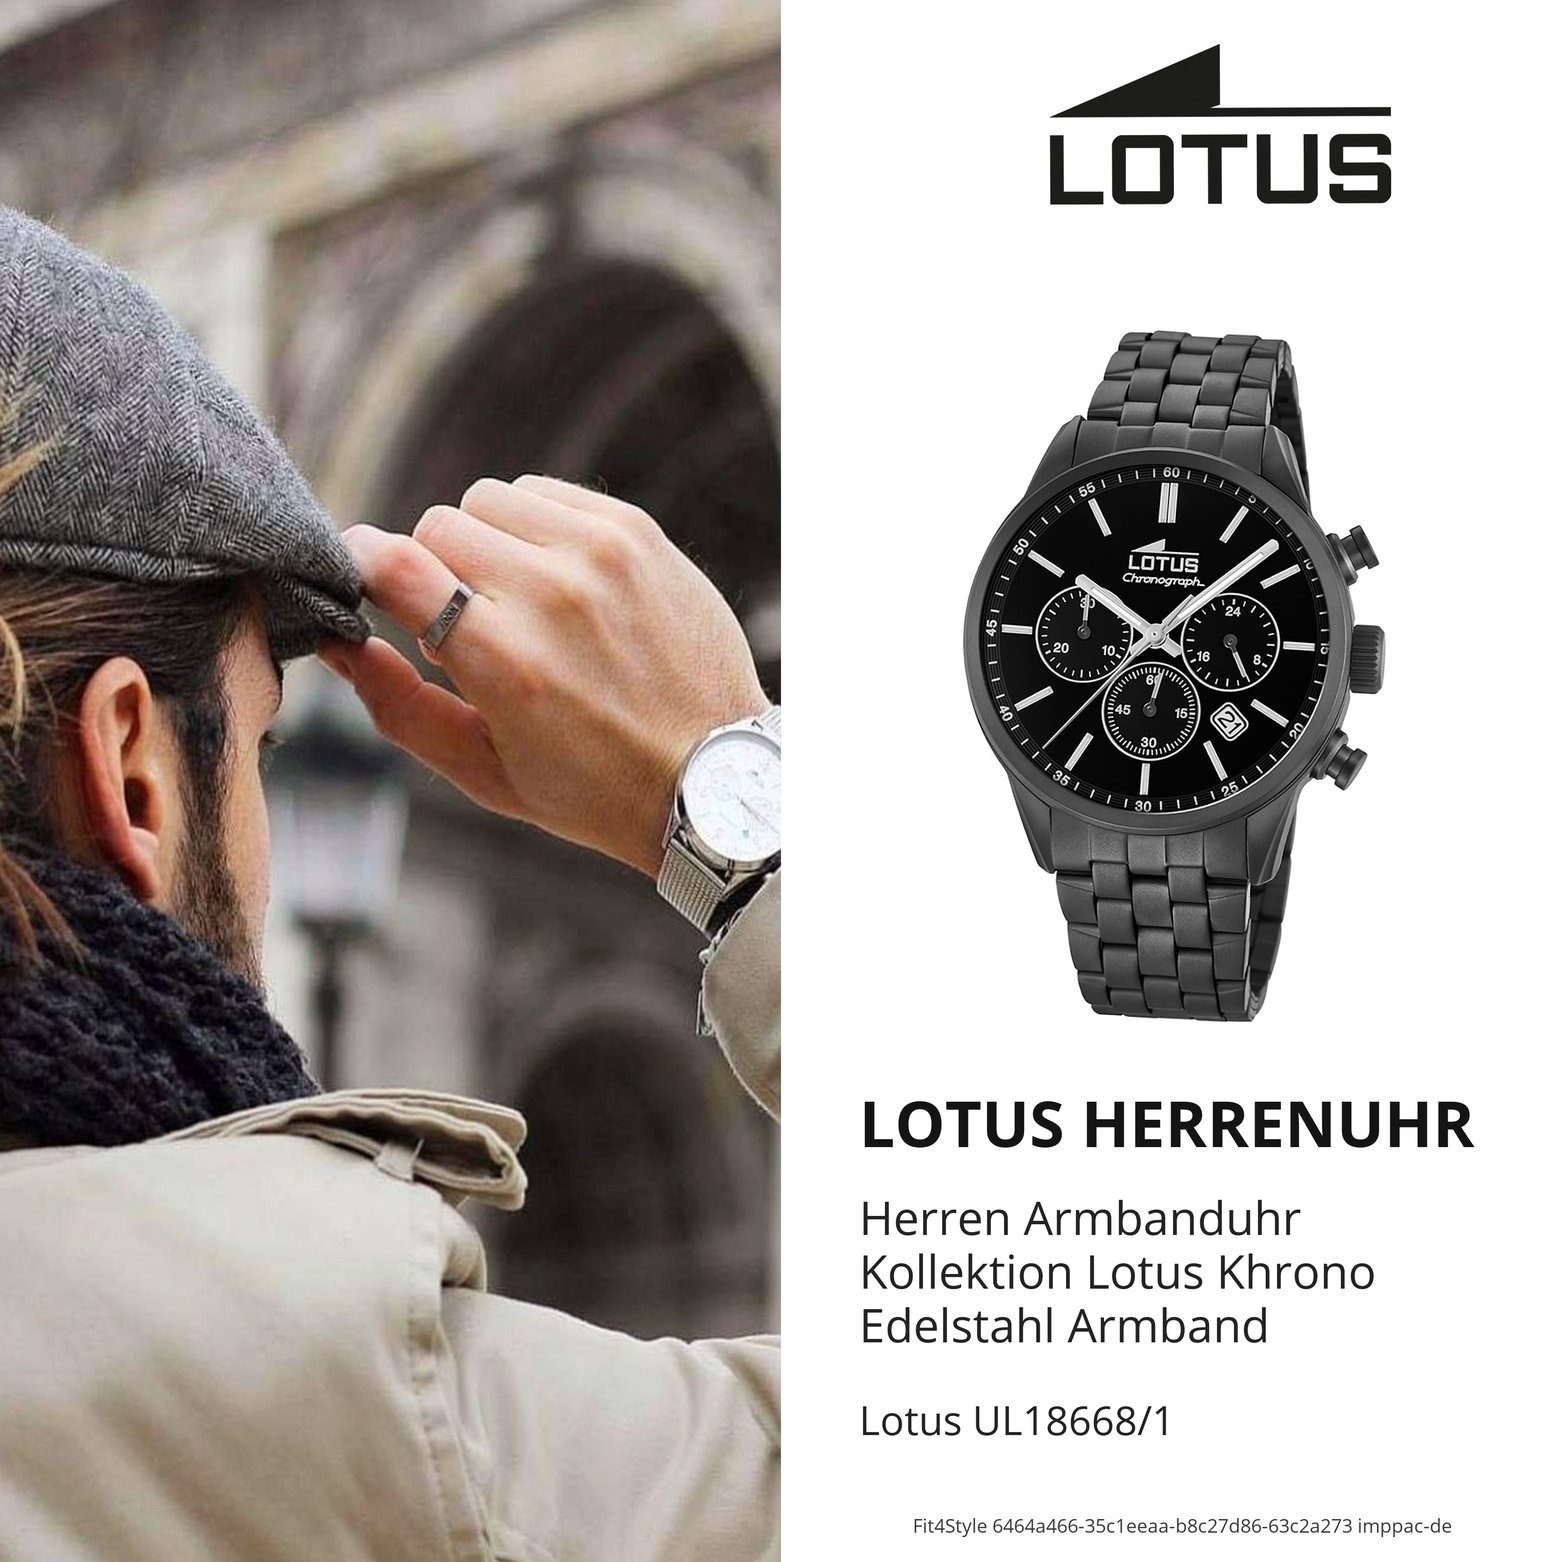 Herren Armbanduhr Herren Uhr Sport (ca. Edelstahl, groß LOTUS 42mm), Edelstahlarmband rund, 18668/1 Quarzuhr schwarz Lotus